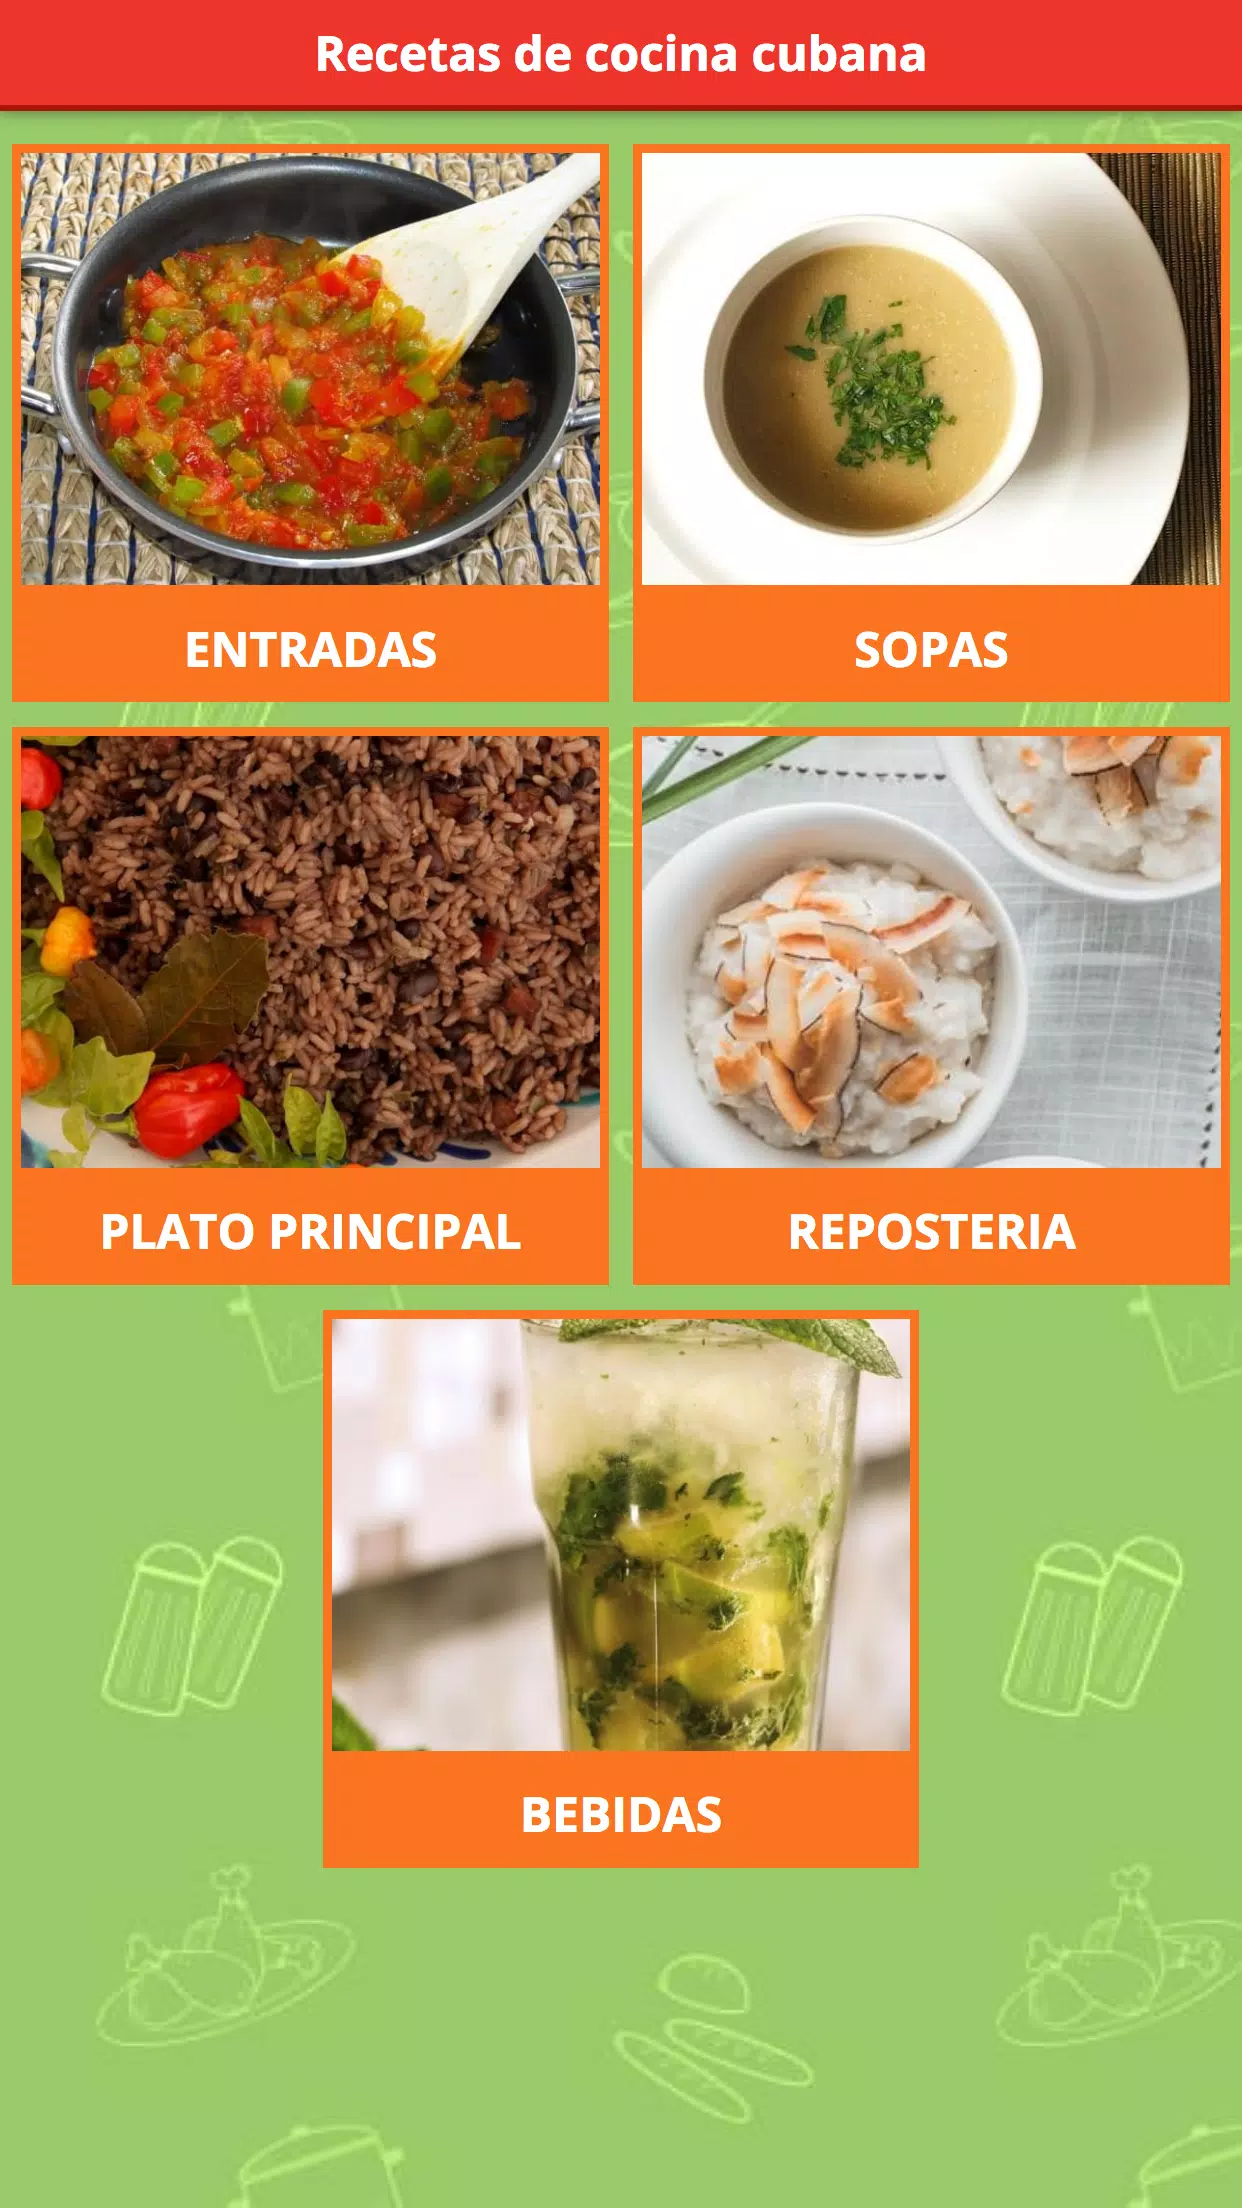 Download do APK de Recetas de Cocina Cubana para Android